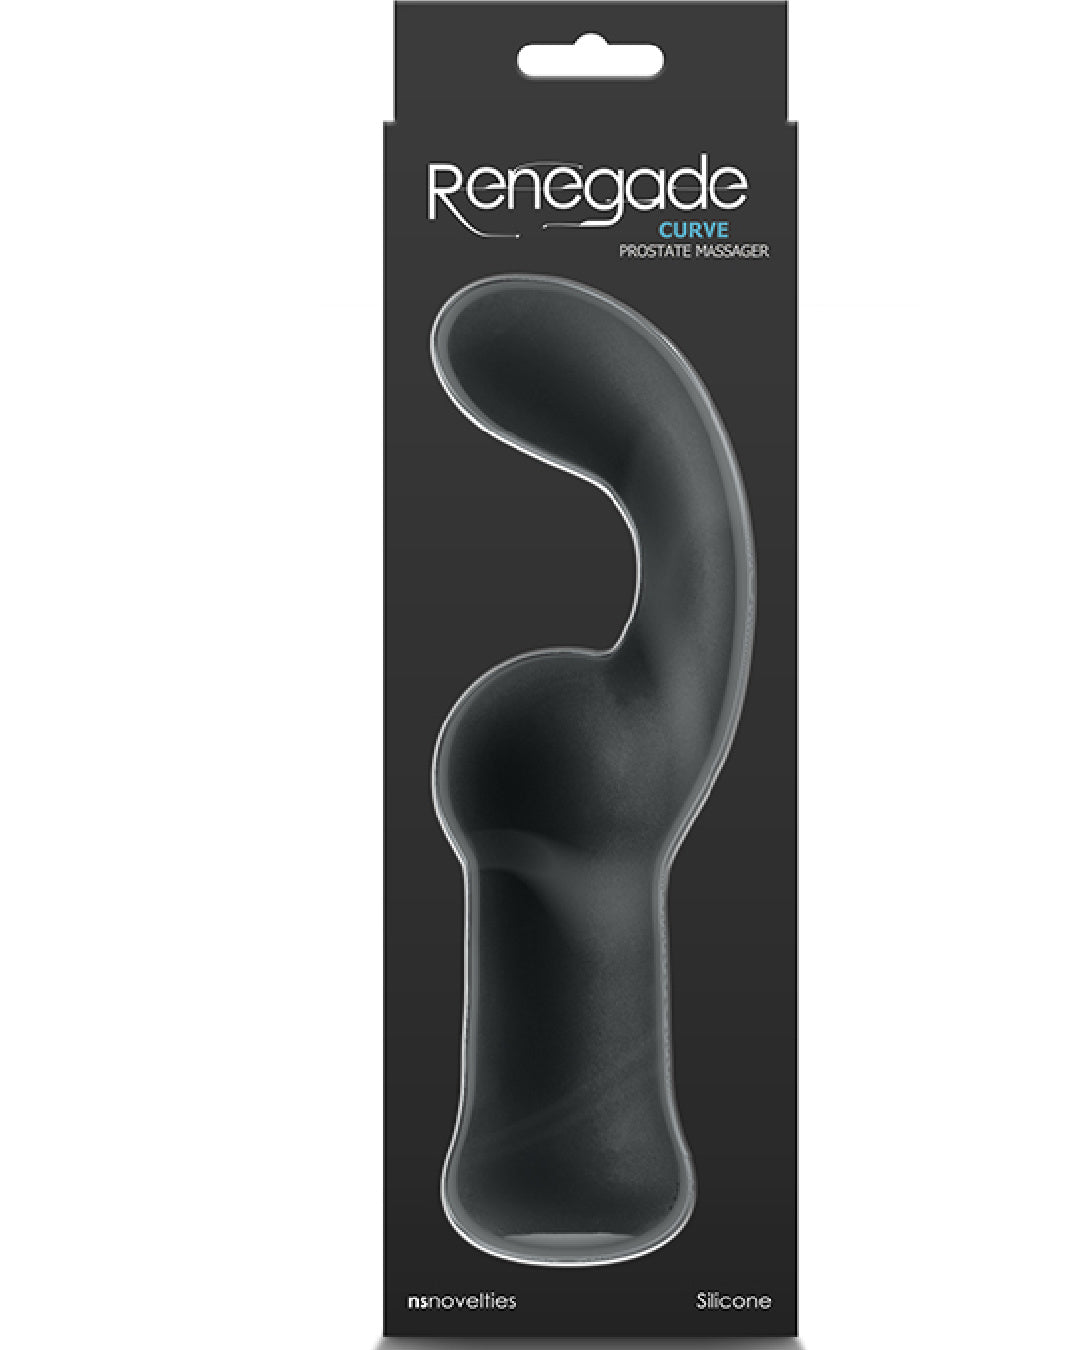 Renegade Curve Vibrating Prostate Massager product box 